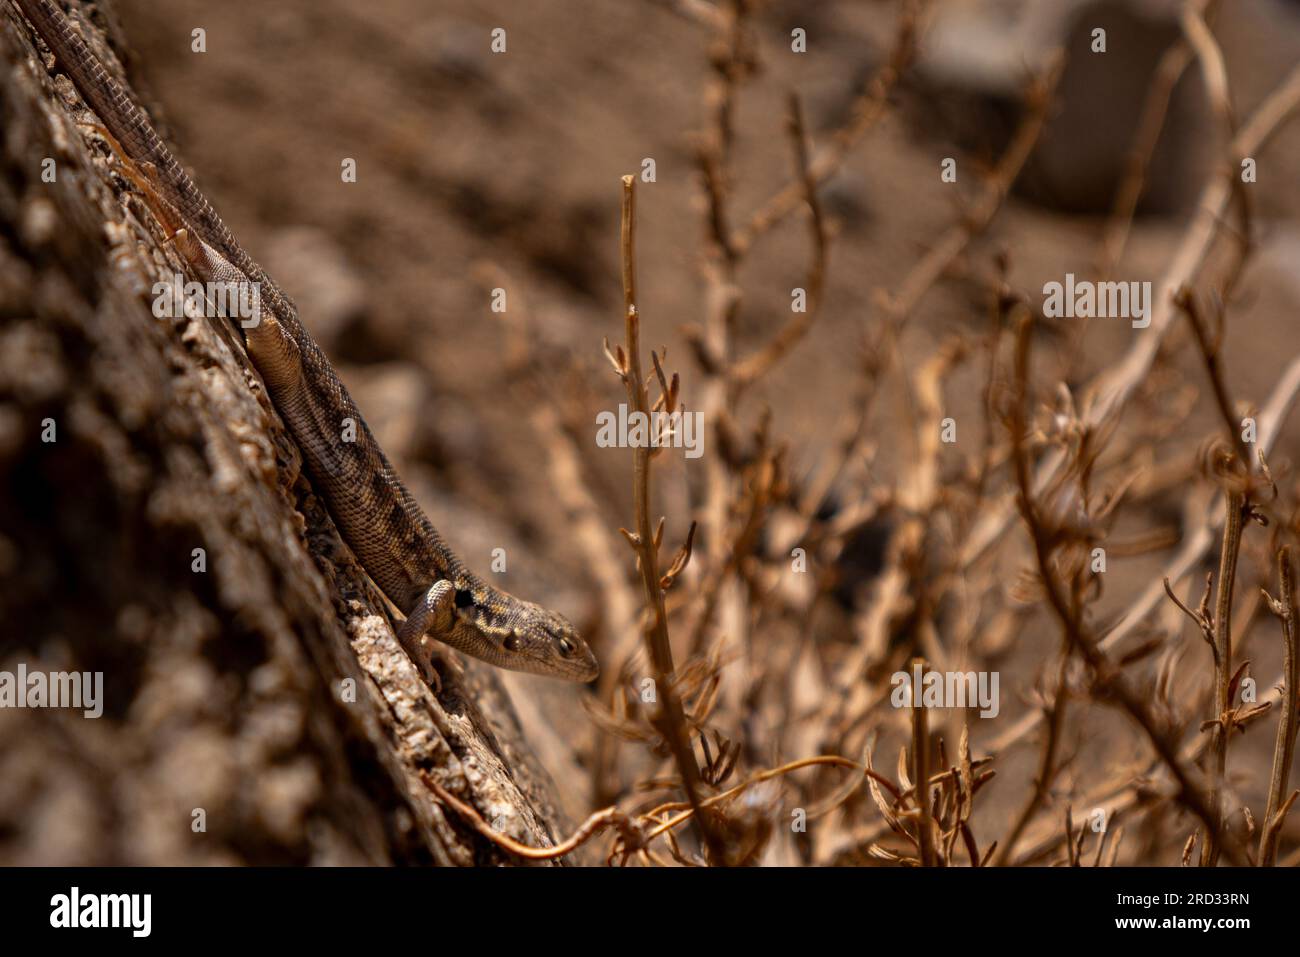 lizard in the desert Stock Photo